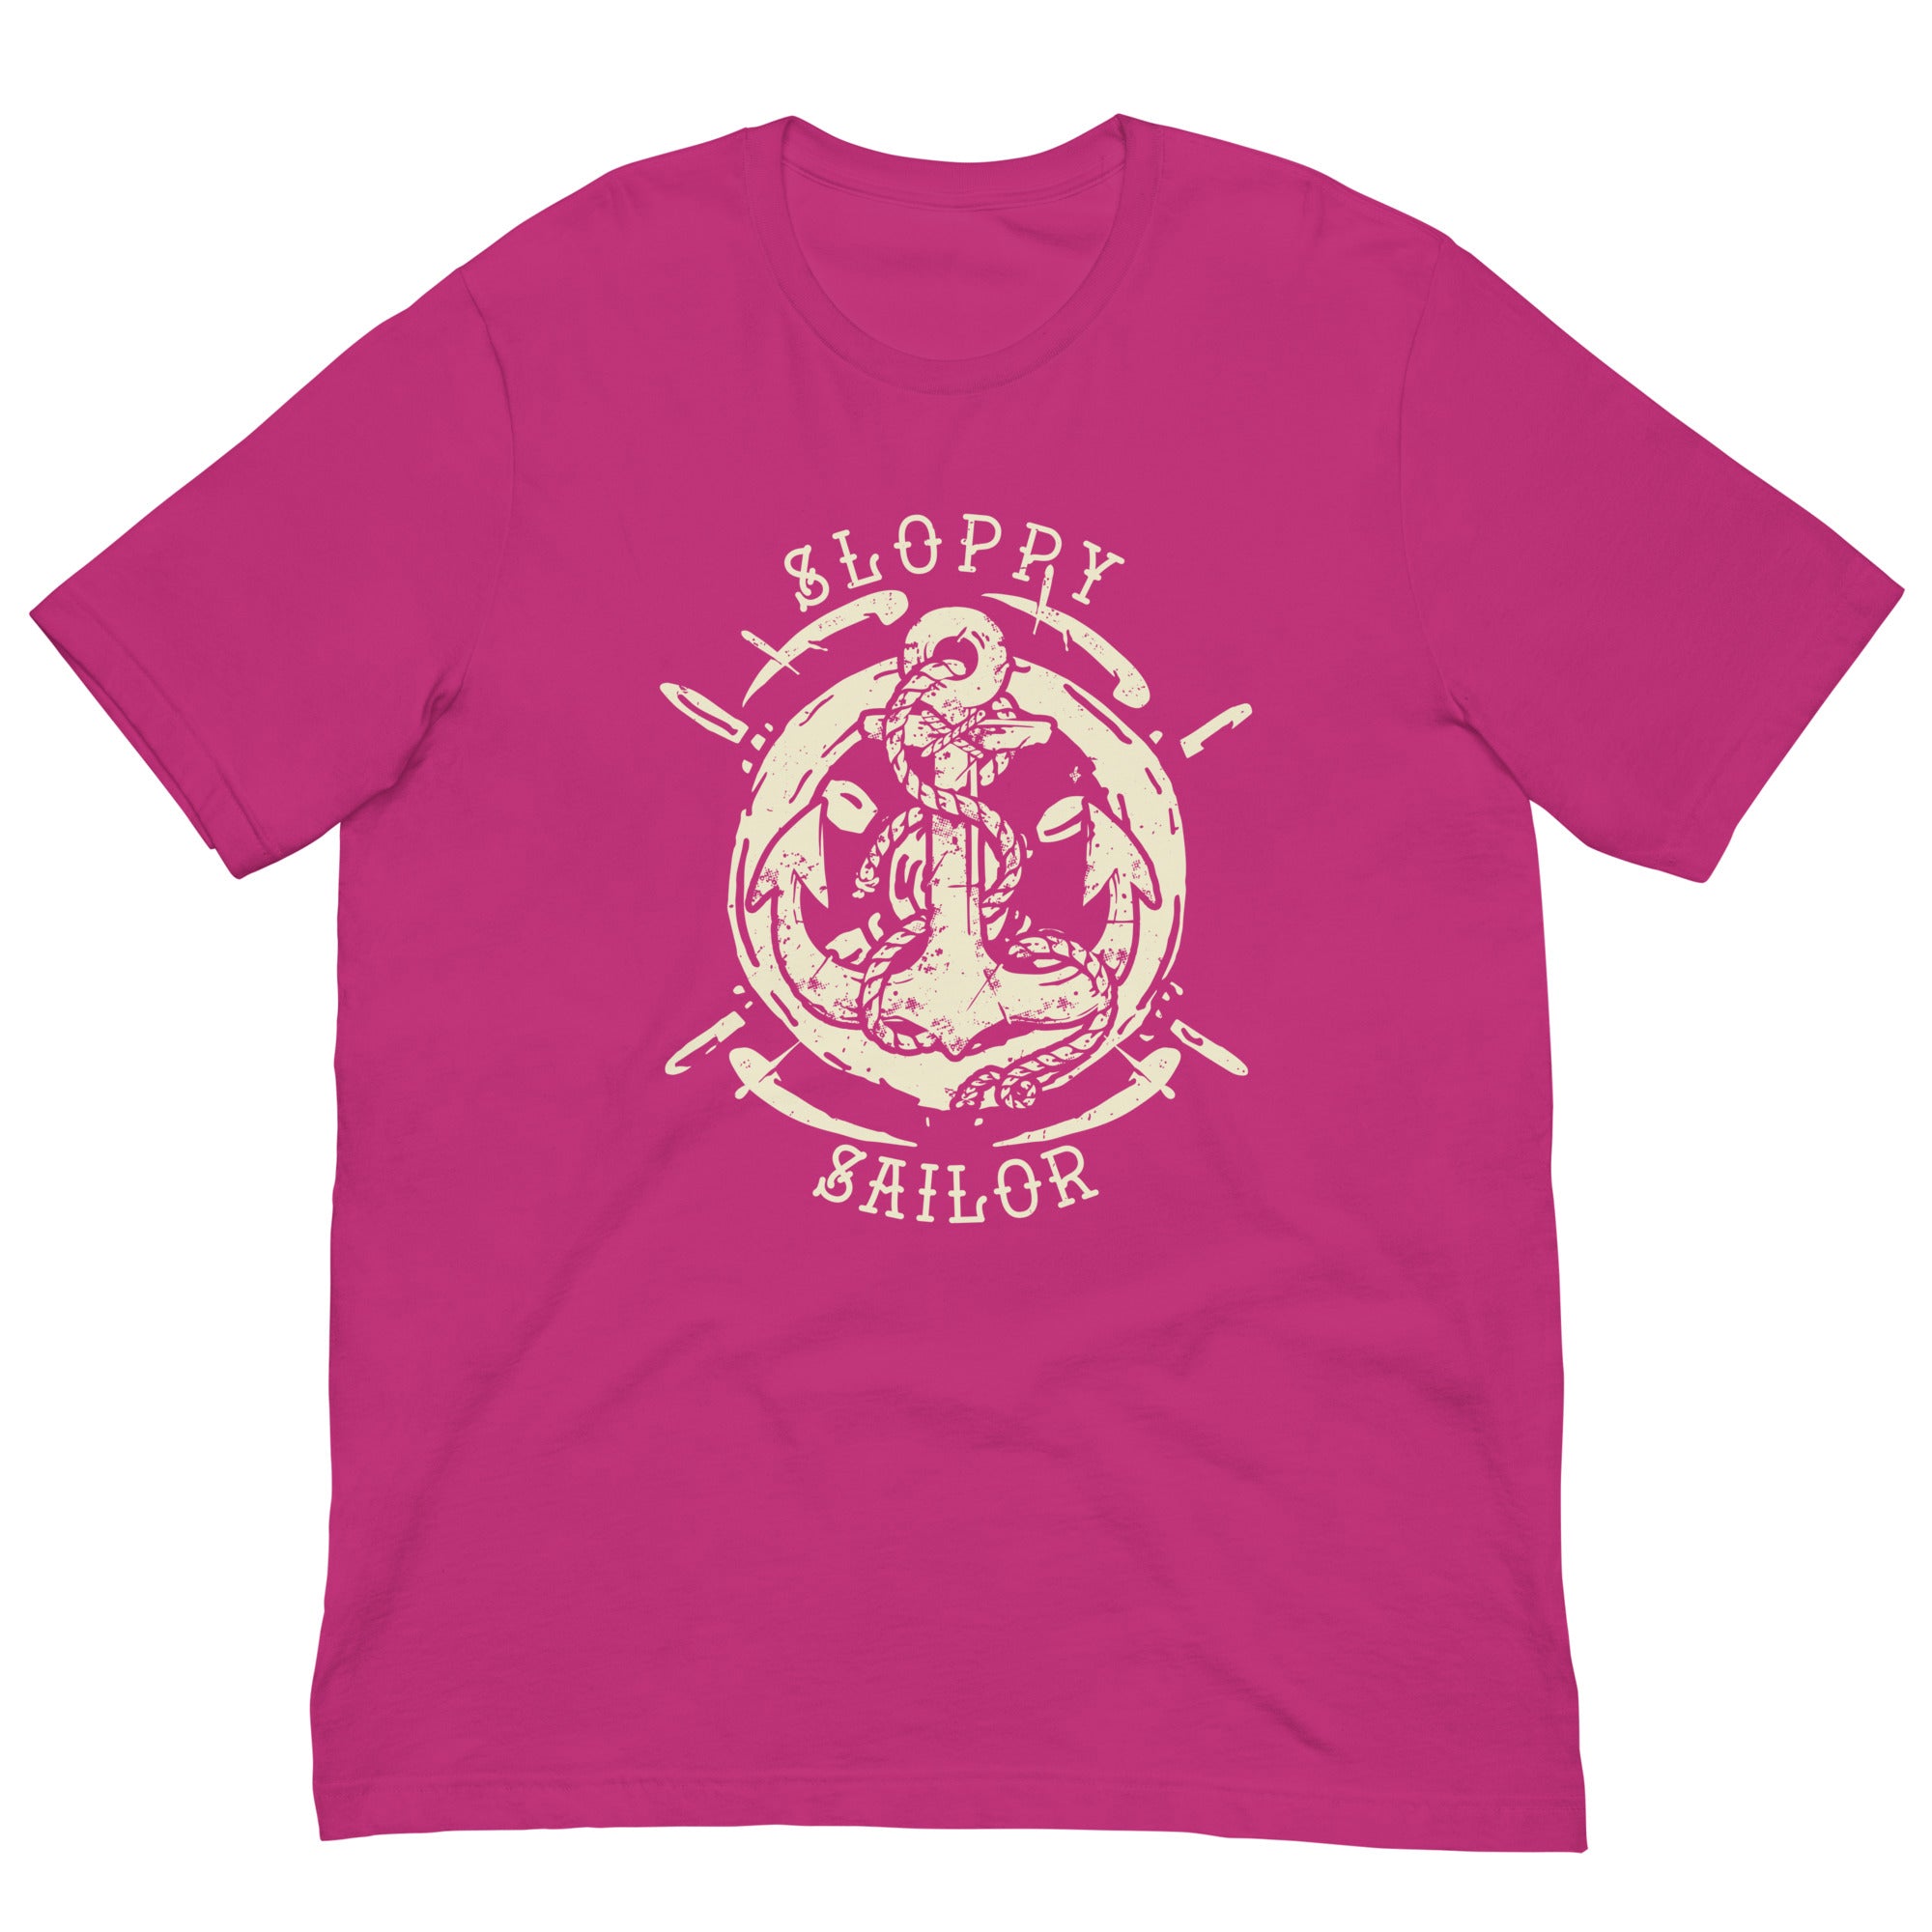 SLOPPY SAILOR - Premium T-Shirt